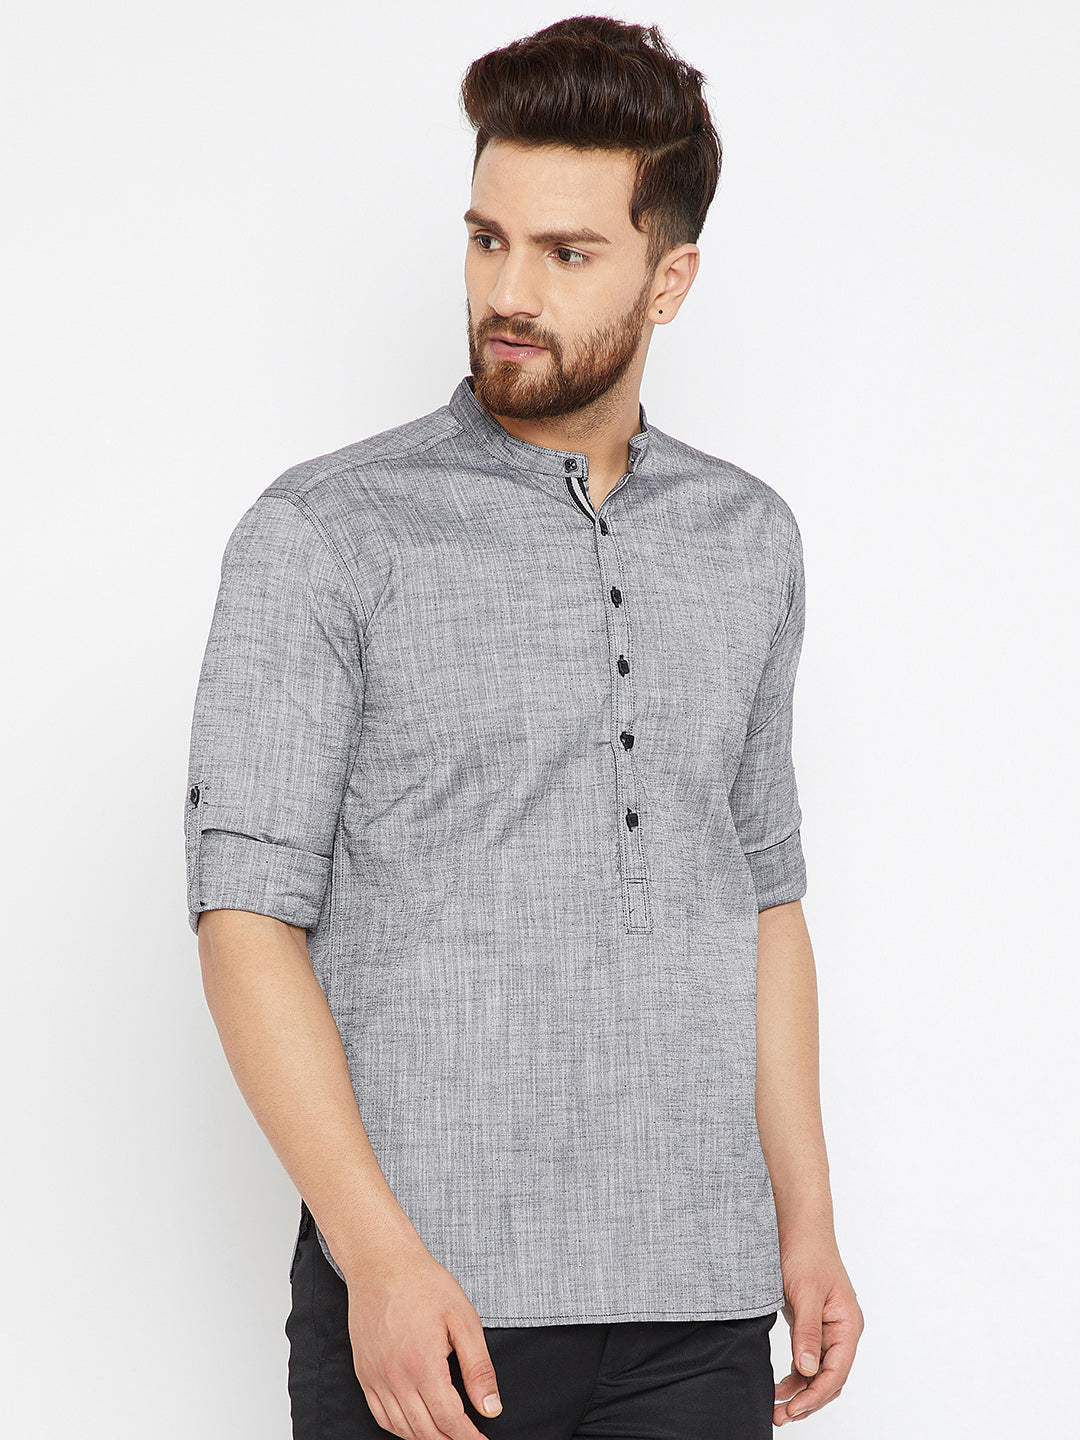 Men's Textured Grey Shirt Kurta - Even Apparels